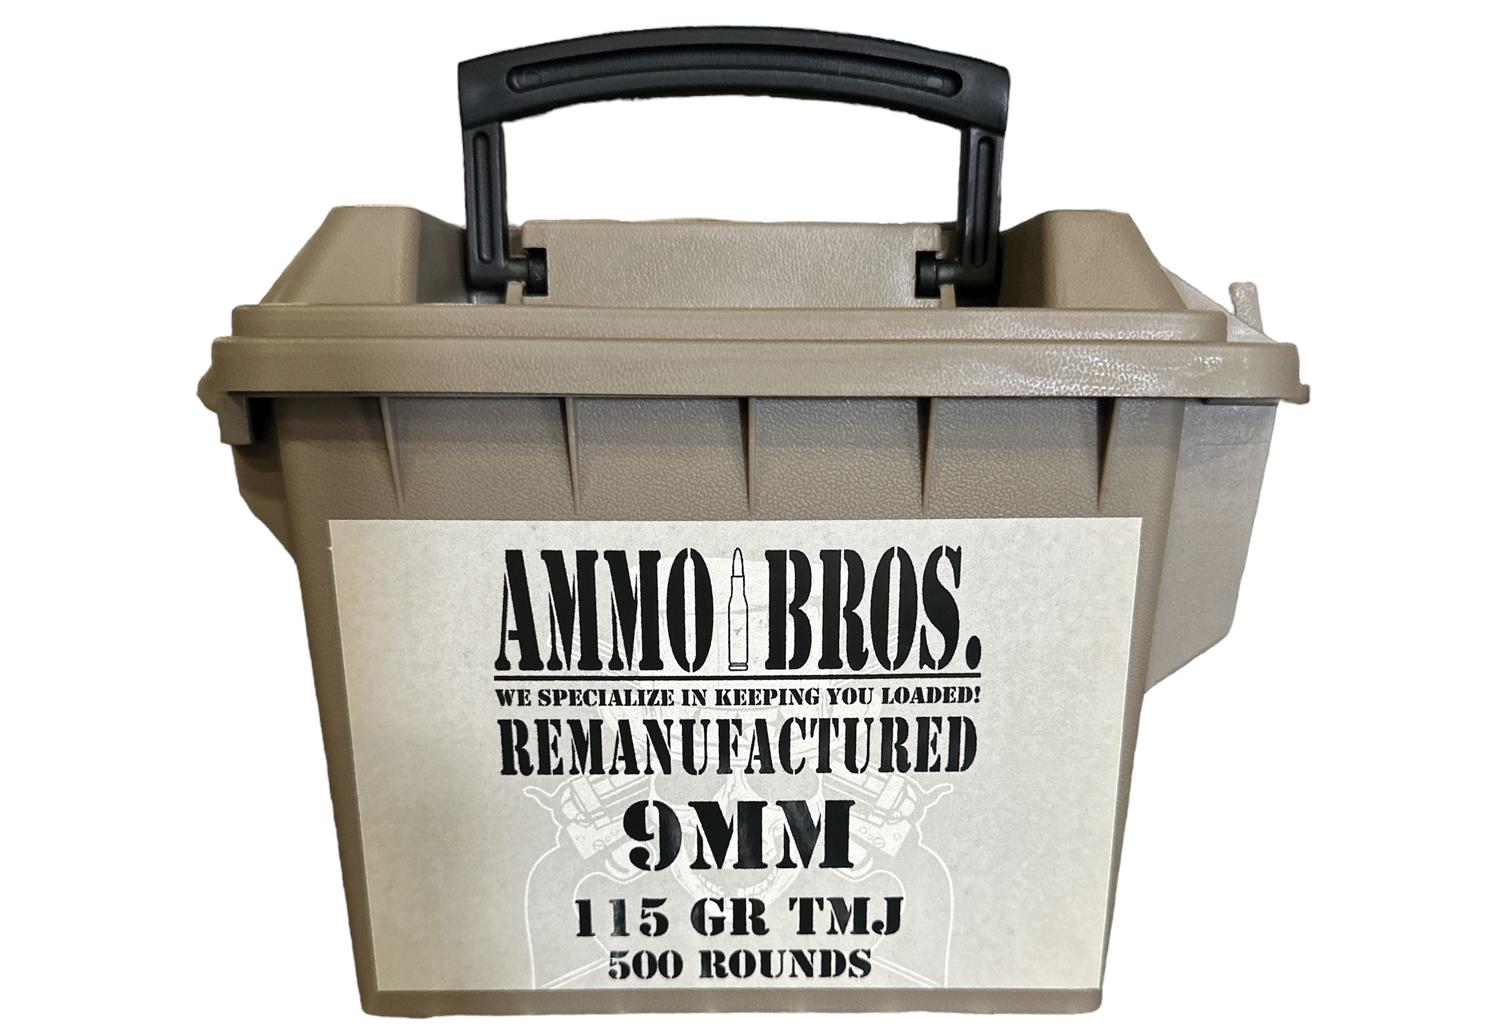  Ammo Bros Reloads 9mm 115gr 500rds